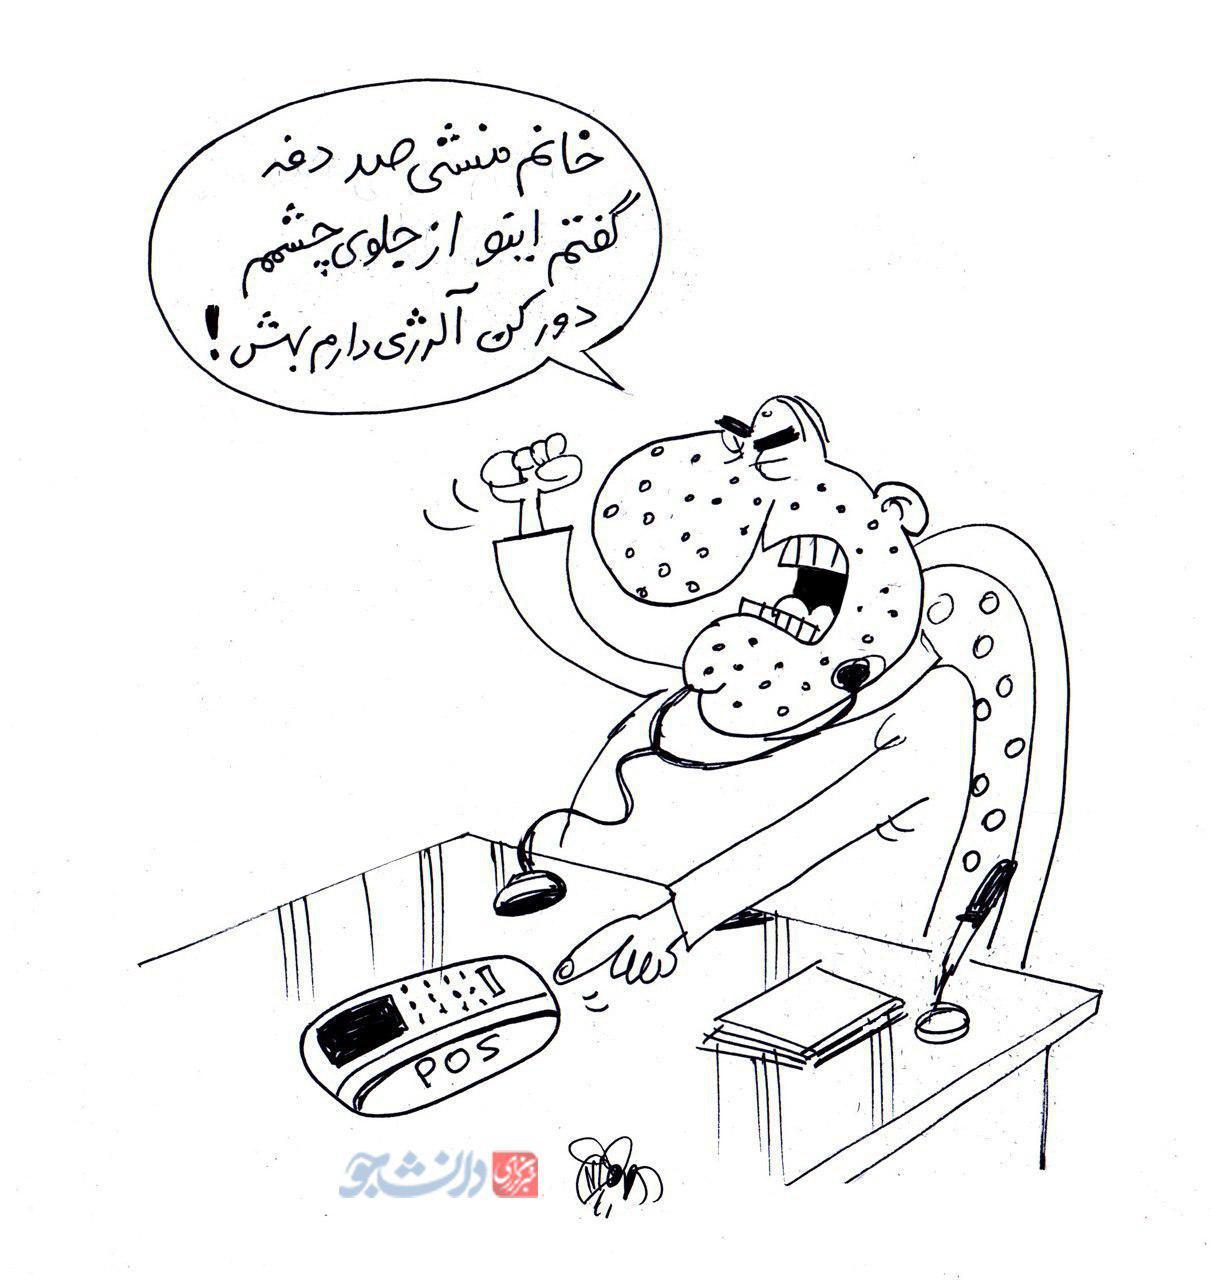 کاریکاتور آلرژی پزشکان به پوز!